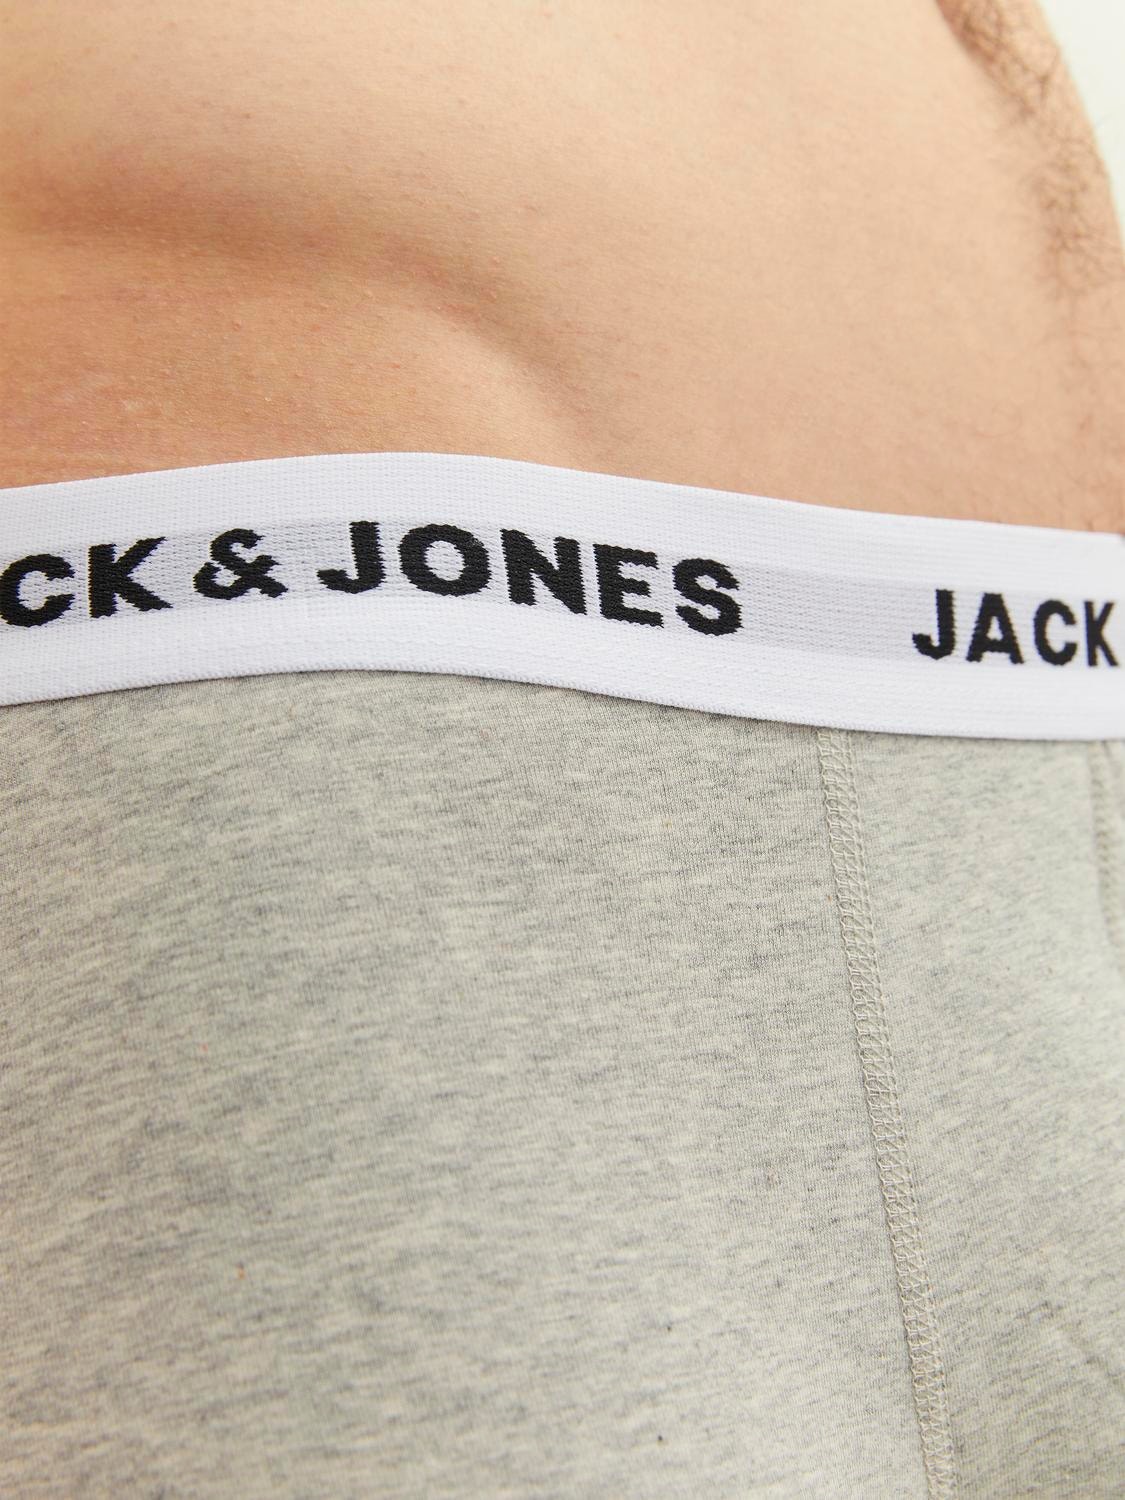 Jack & Jones 5-pak Trunks -Black - 12224877